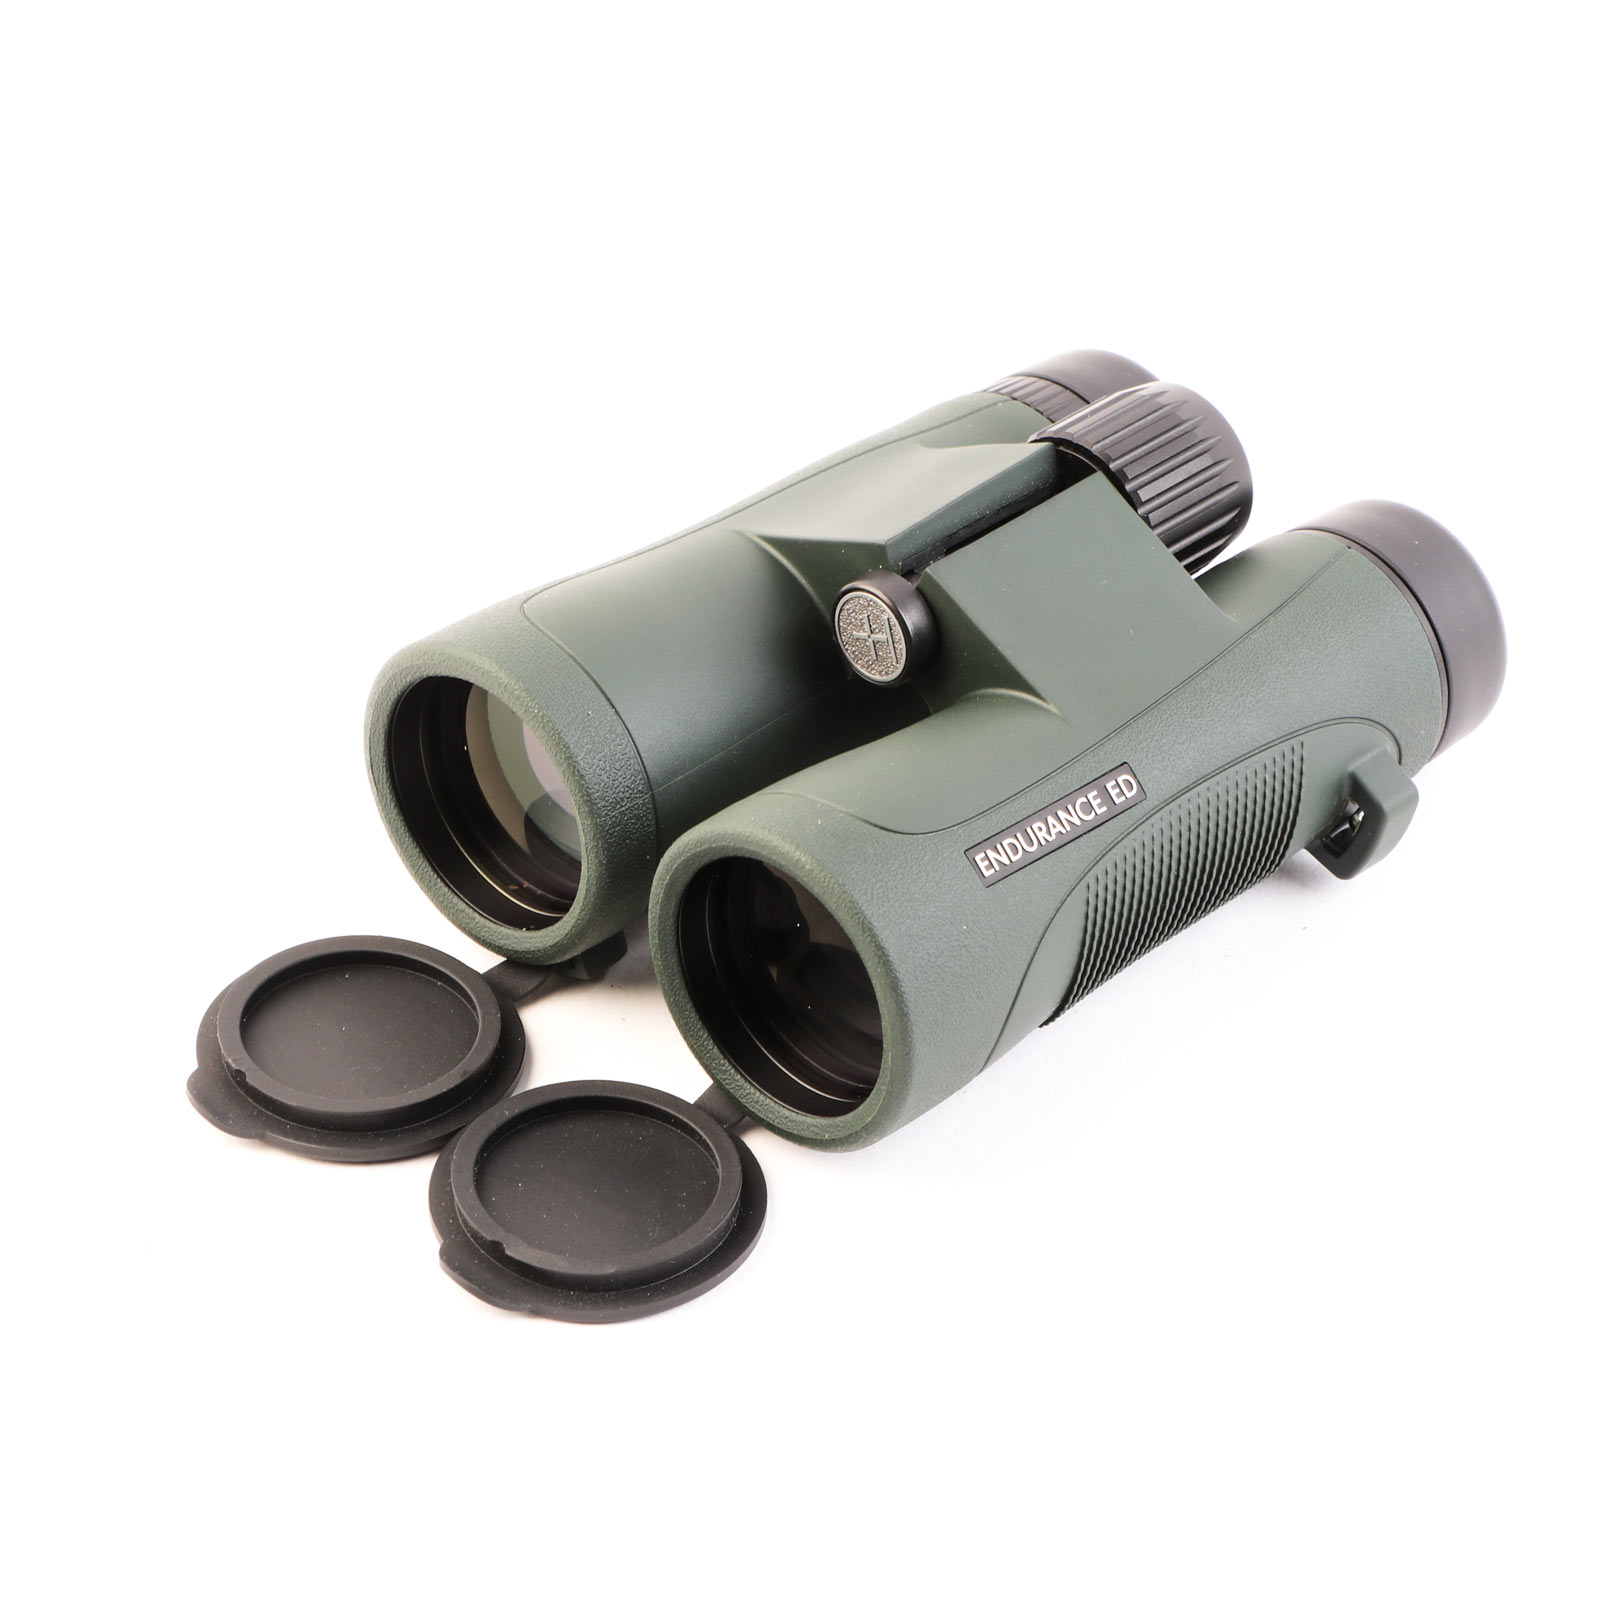 USED Hawke Endurance ED 10x42 Binoculars